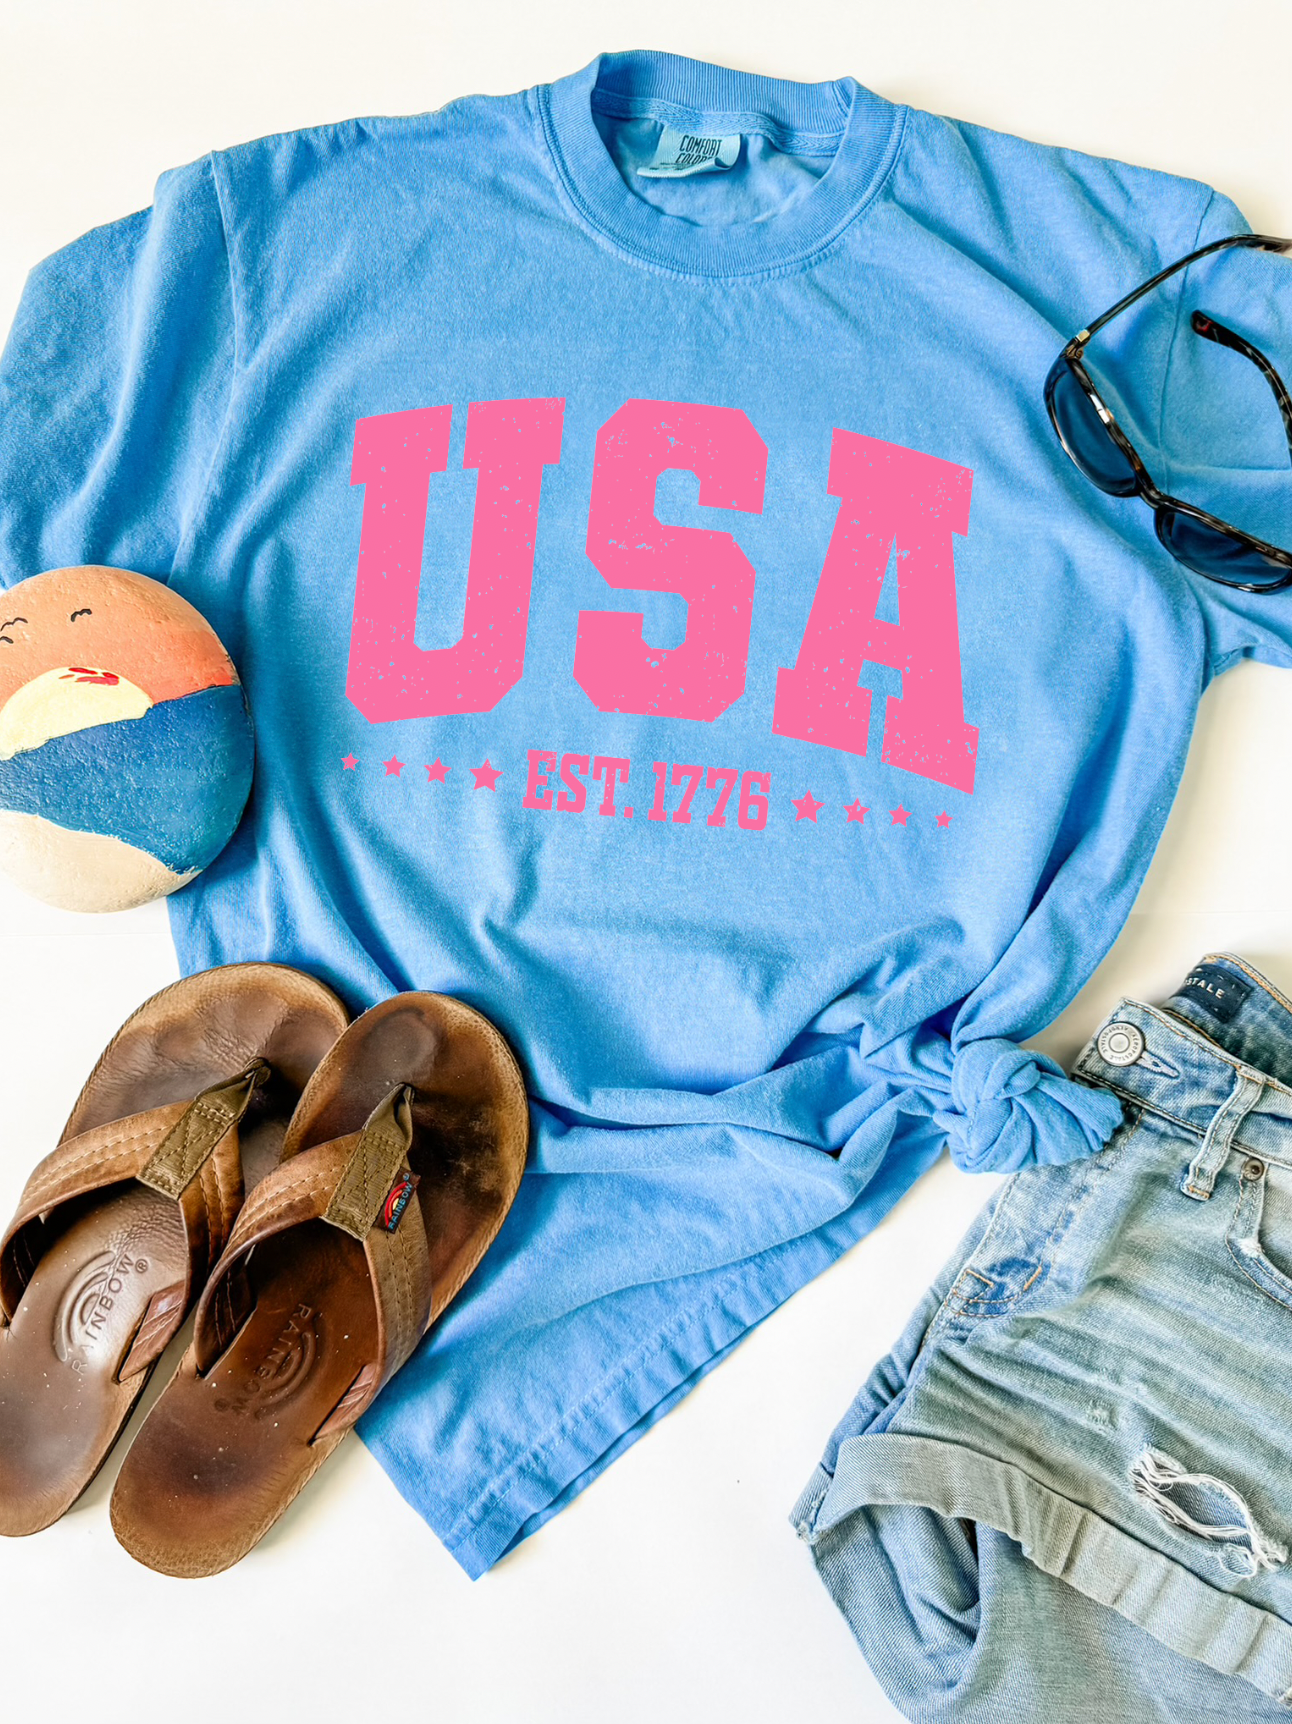 Bright summer beach girl shirt. USA Est. 1776, 4th of July shirt. Comfort Color Neon Blue.